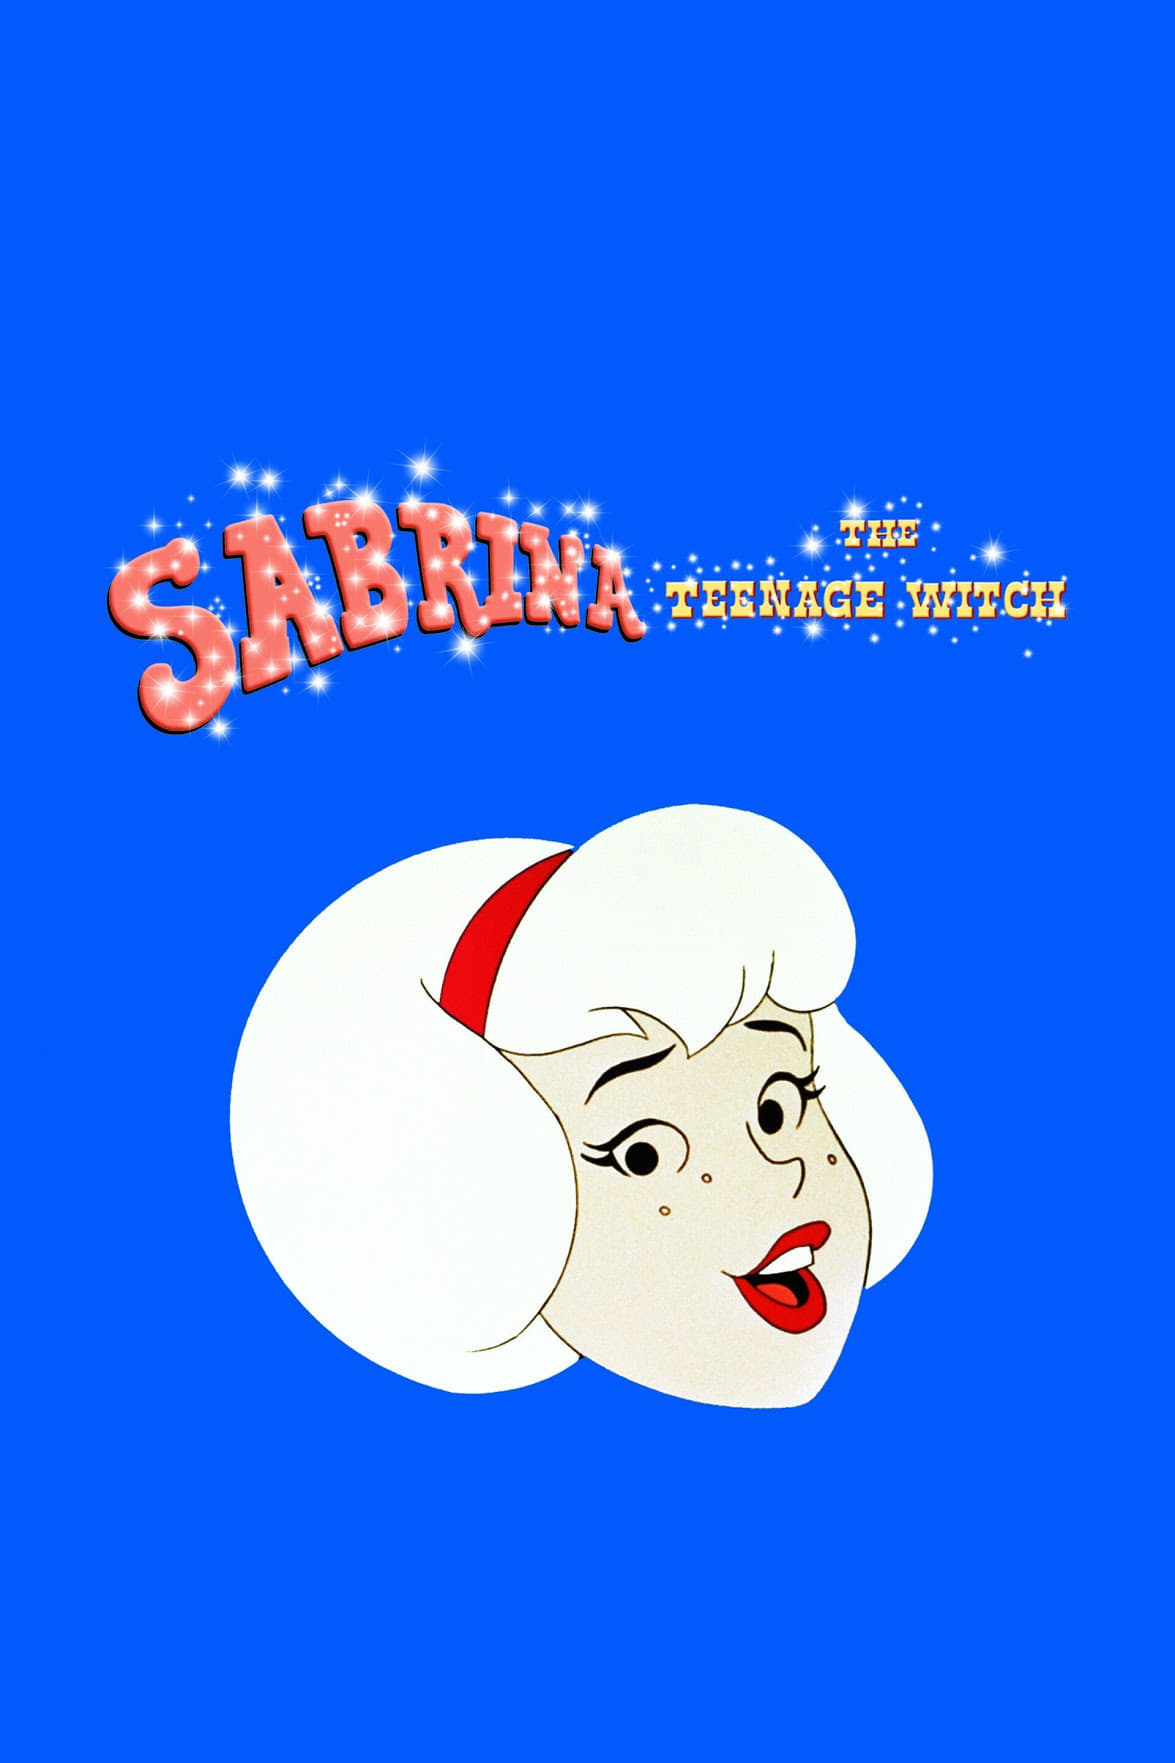 Sabrina, The Teenage Witch